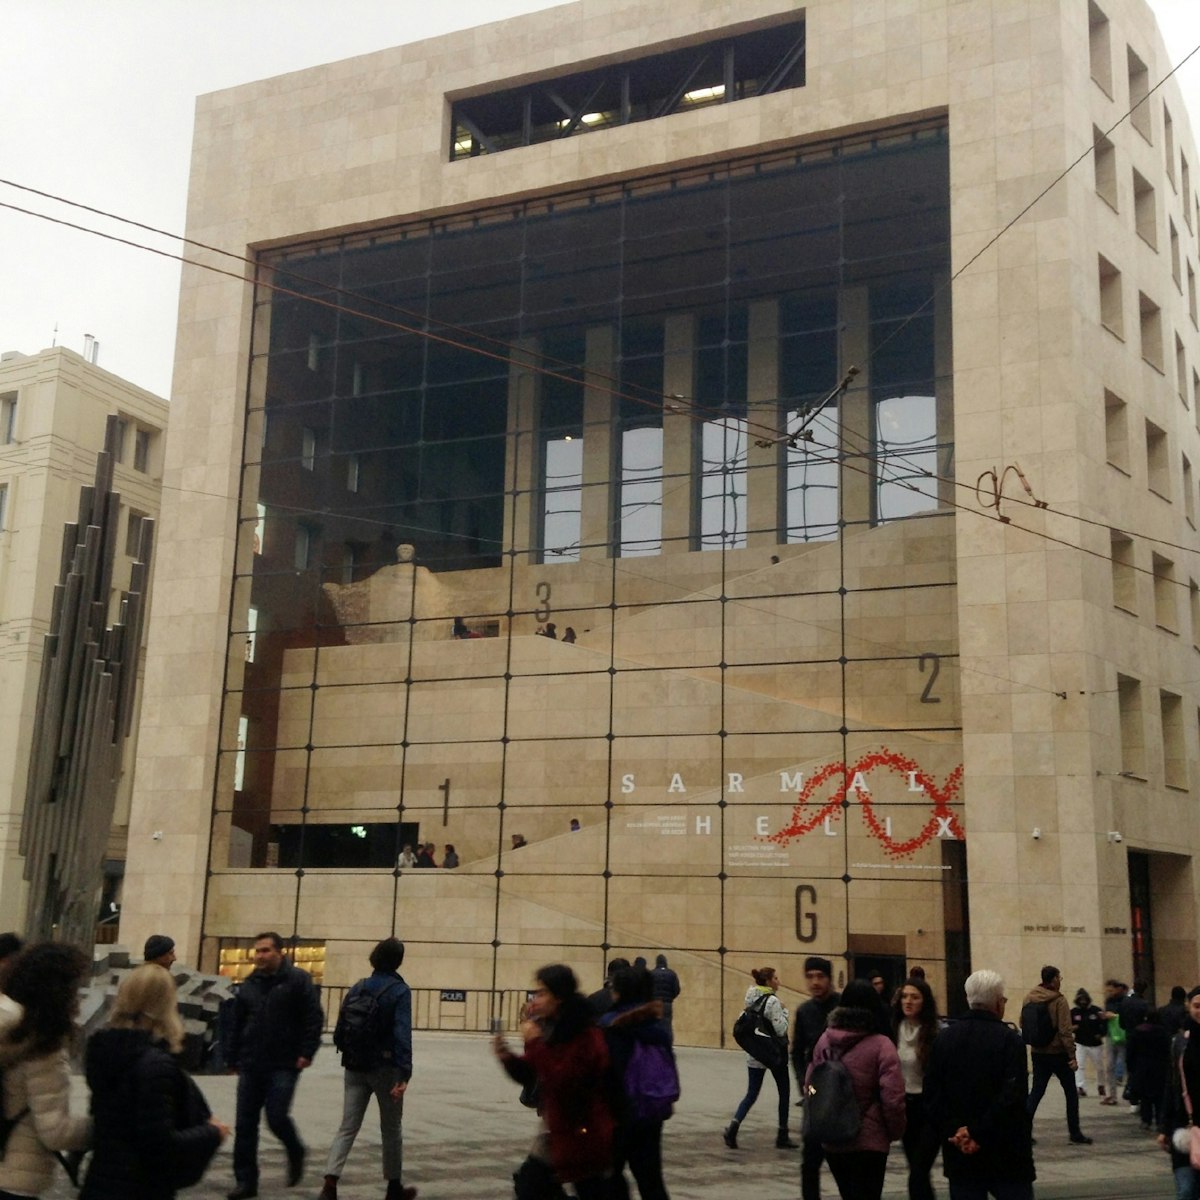 The Yapı Kredi Kültür Sanat building on İstiklal Caddei